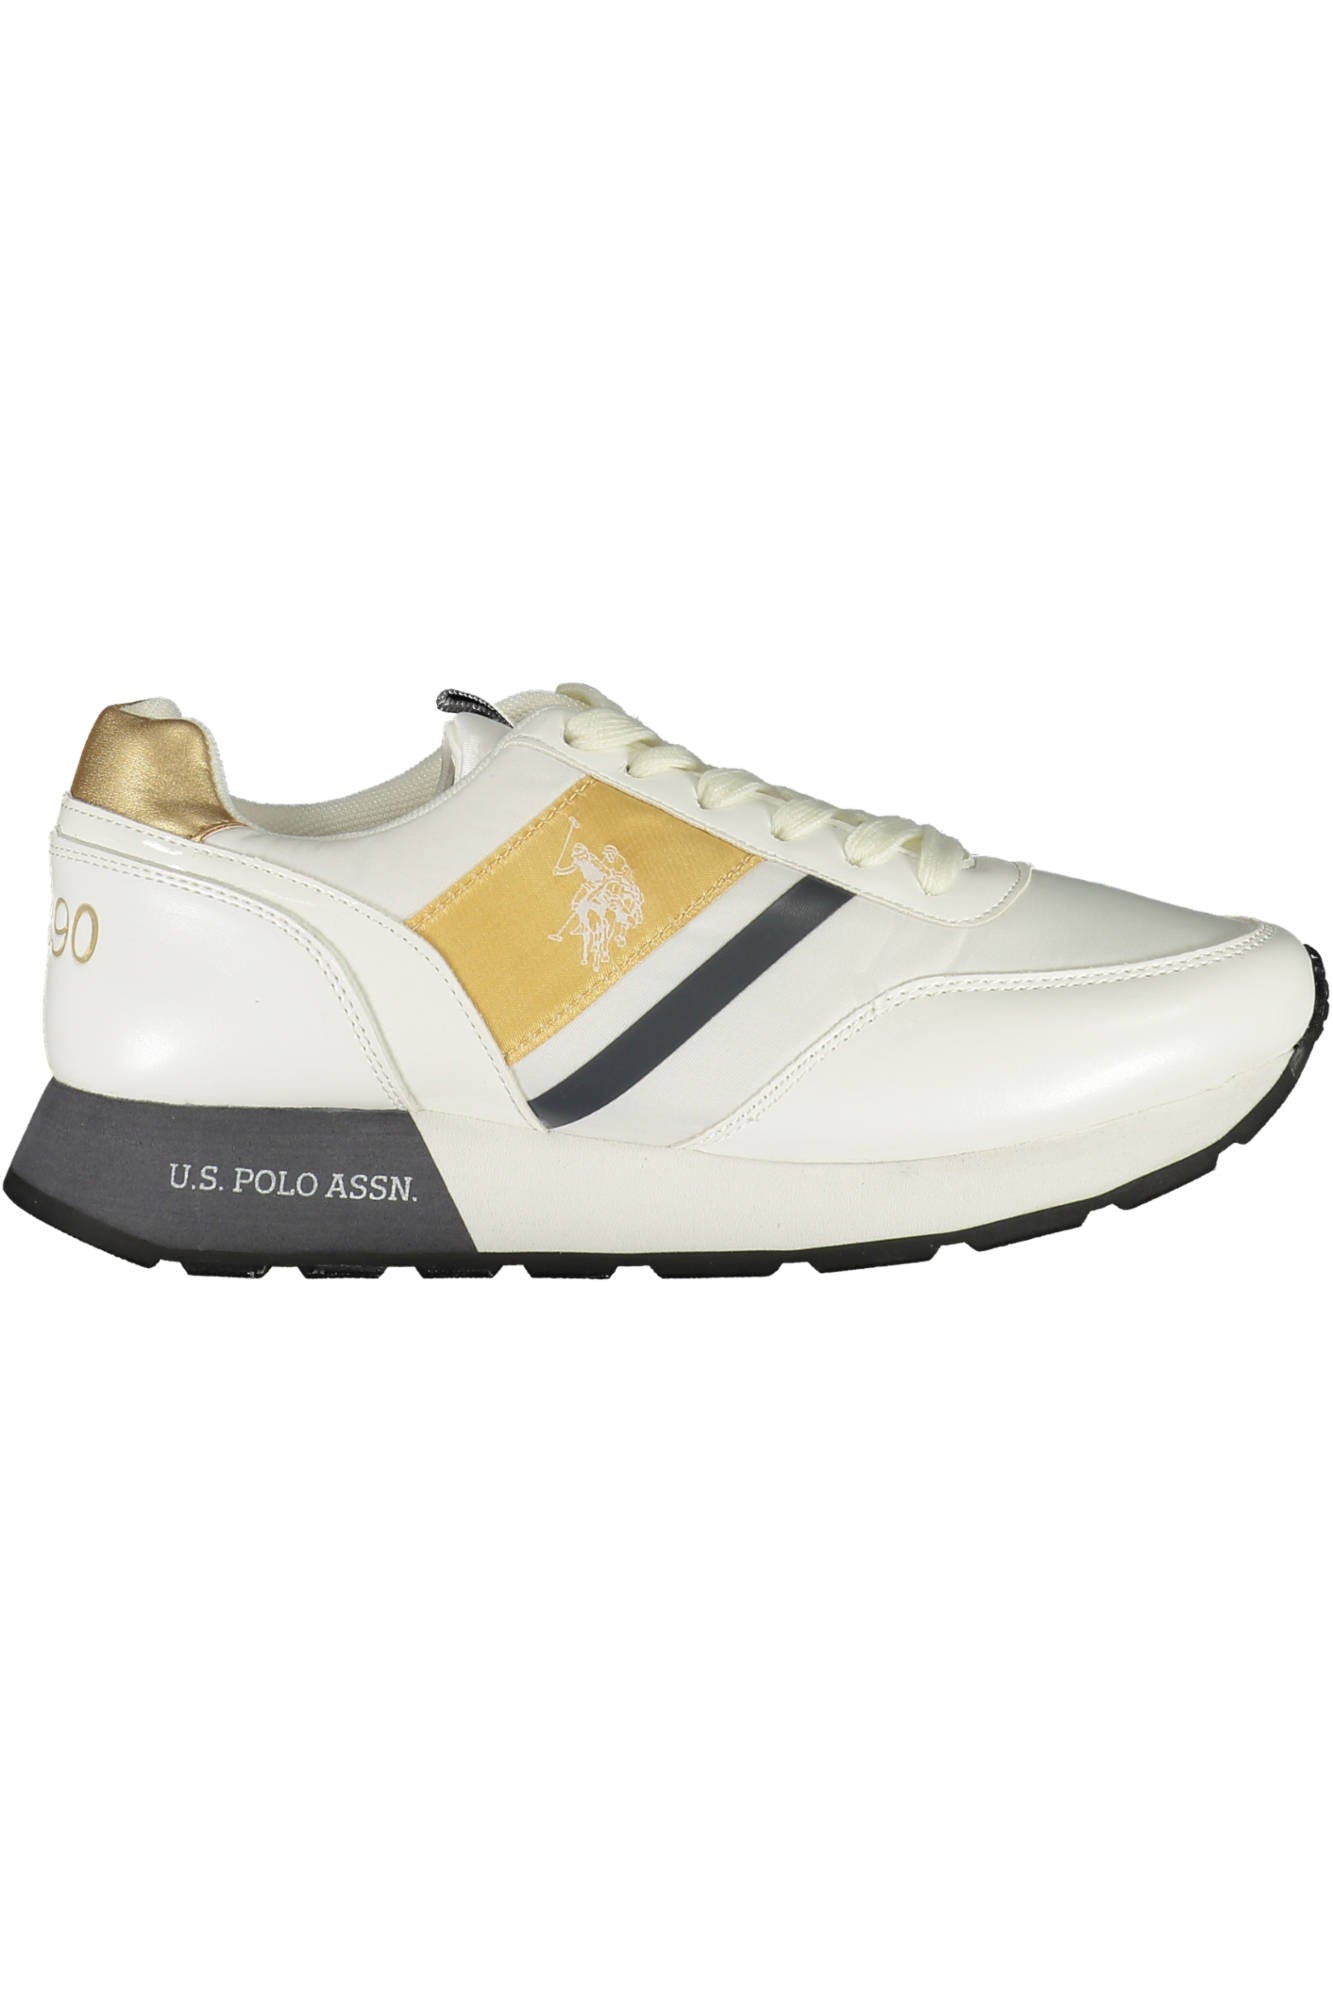 U.S. POLO ASSN. White Sneakers - Fizigo